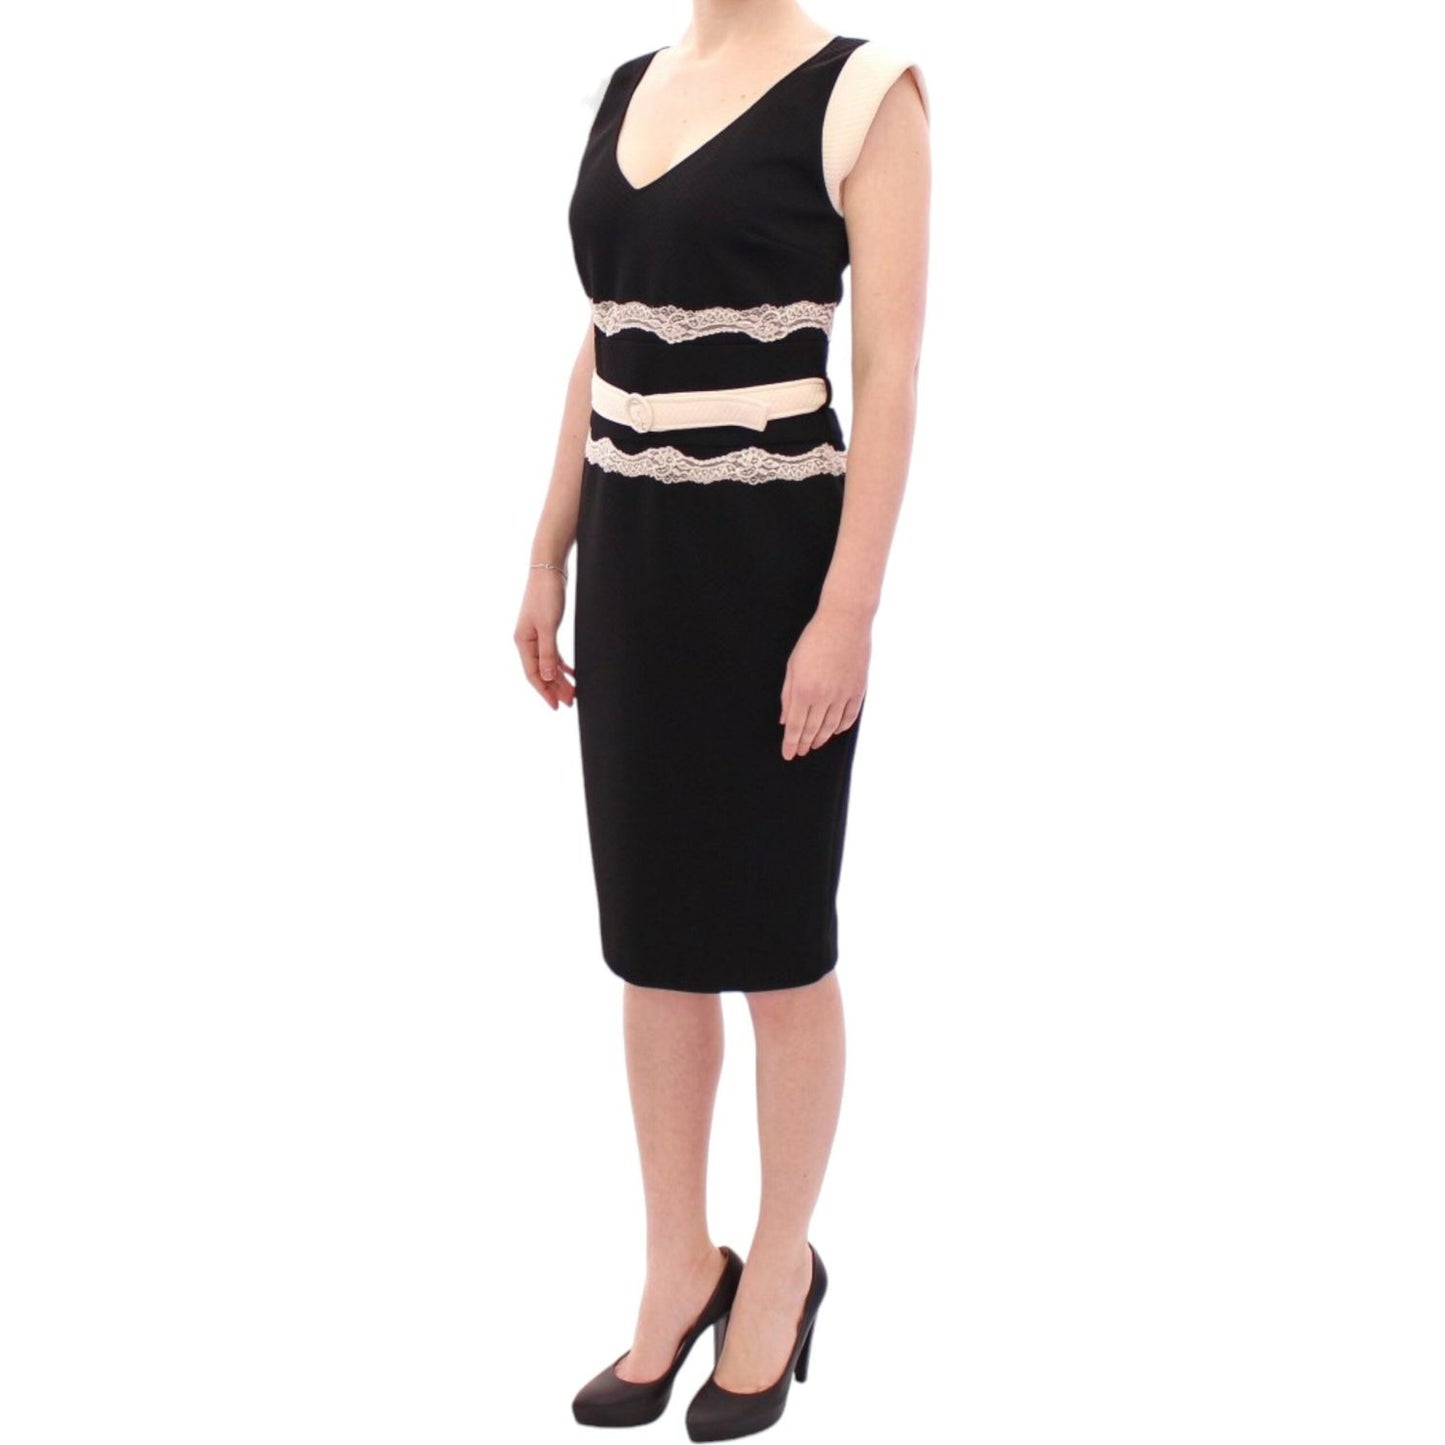 Cavalli Elegant Sheath Lace Dress in Black and Beige black-lace-sheath-dress 11927-black-lace-sheath-dress-1-scaled-7e5178ed-fa2.jpg